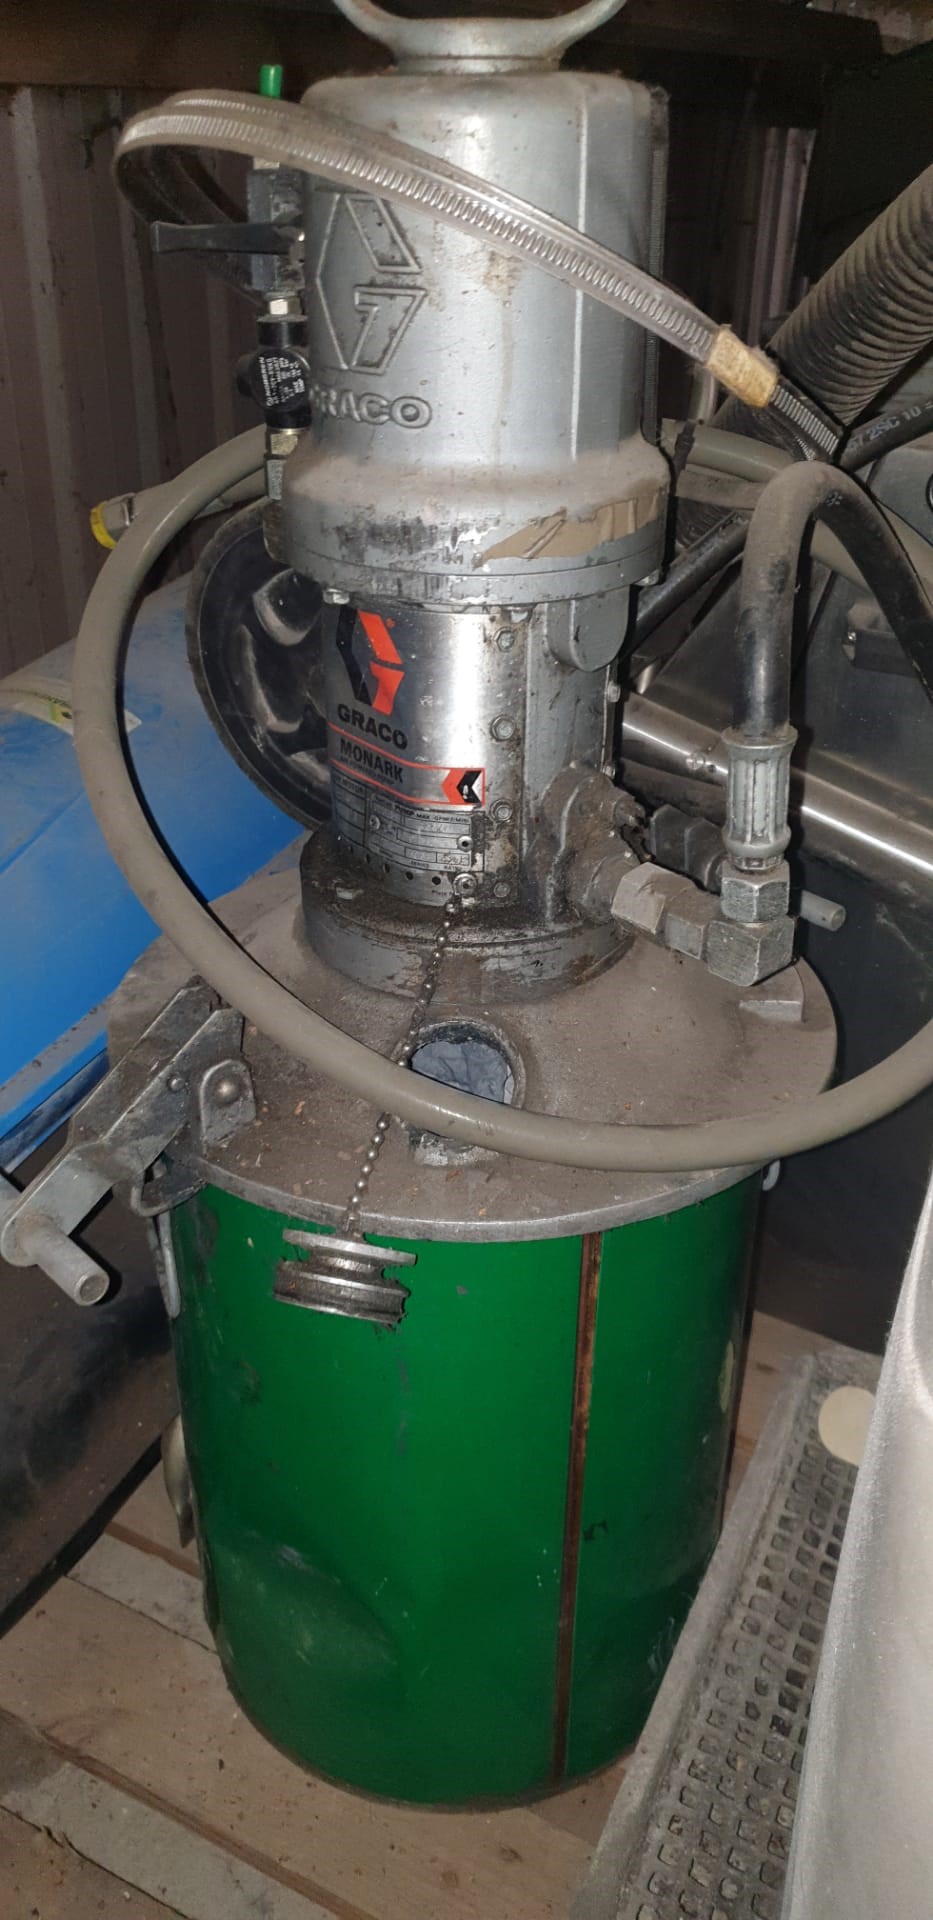 ISO-059 Graco flushing pump